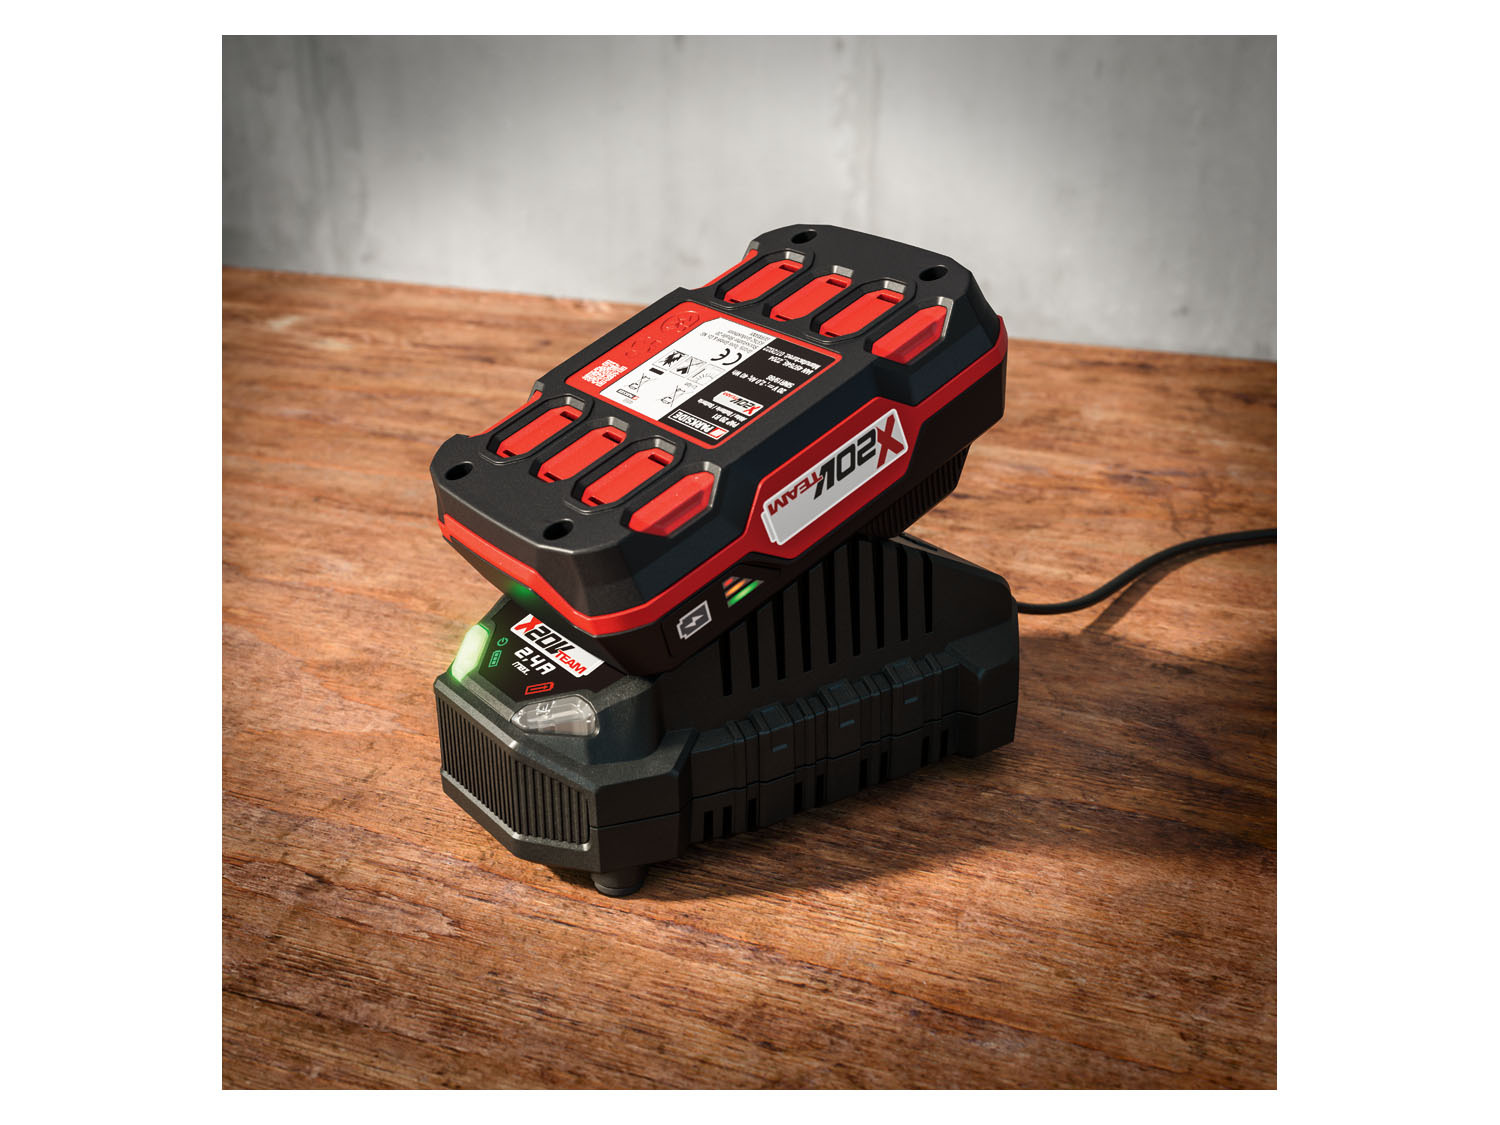 PARKSIDE® Batterie « PAP 20 B1 » 20 V, 2 Ah avec charg…